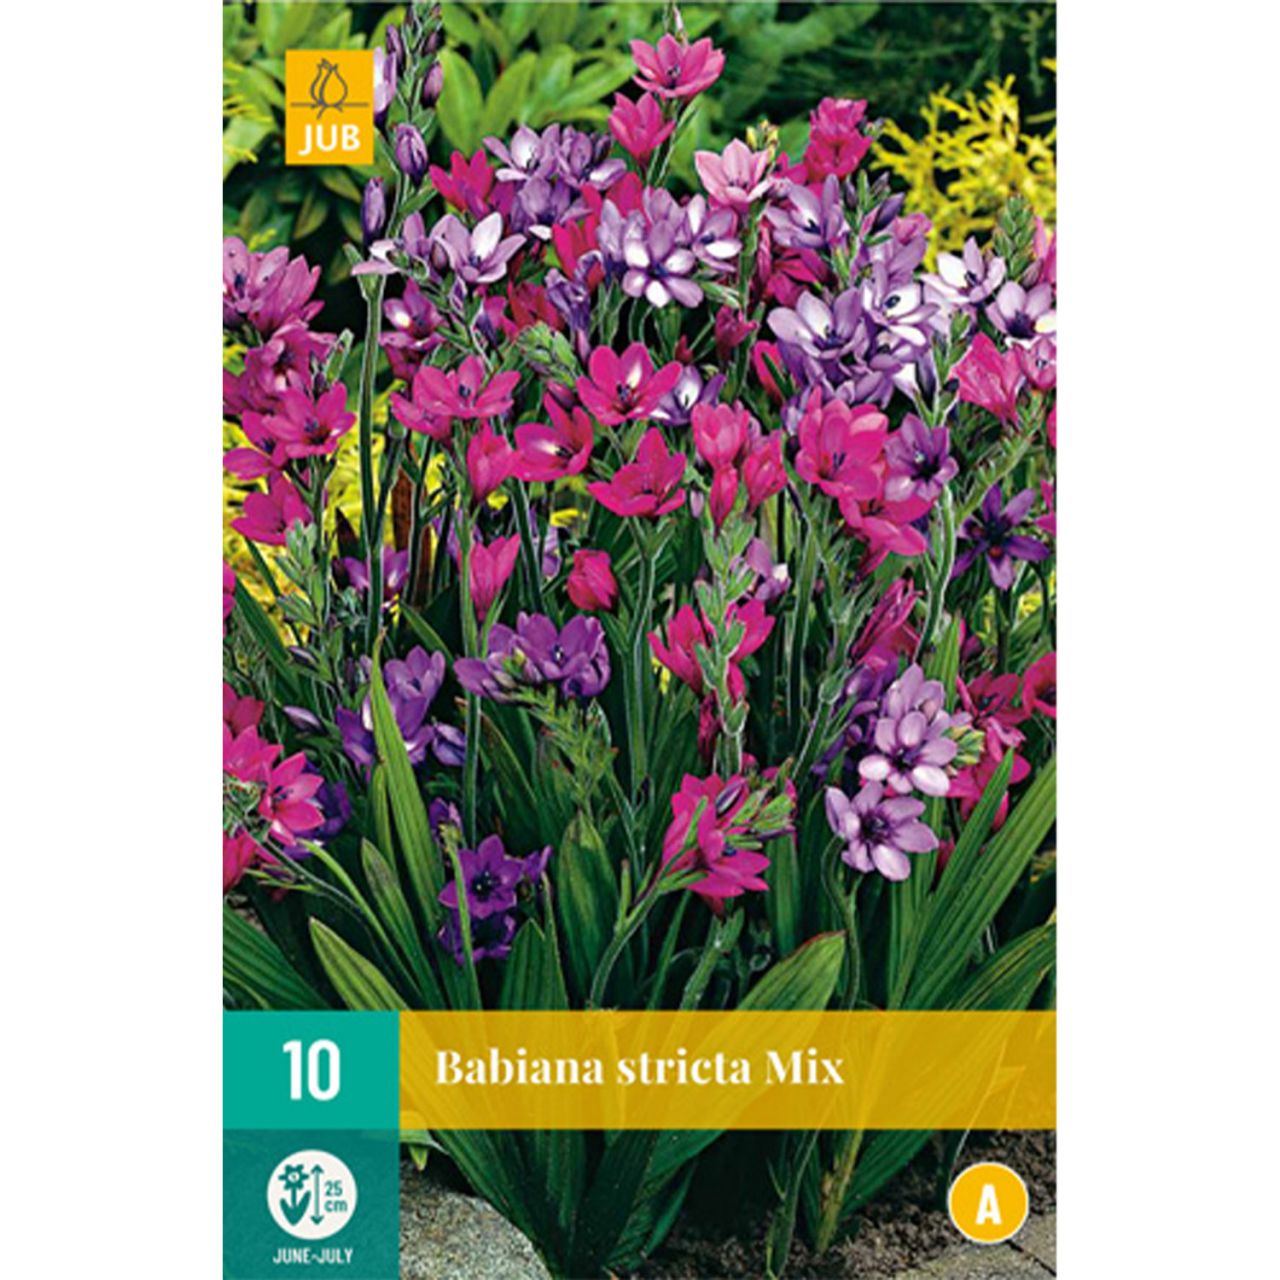 Kategorie <b>Frühlings-Blumenzwiebeln </b> - Affenbrot 'Babiana Mix' - 10 Stück - Babiana stricta 'Mix'